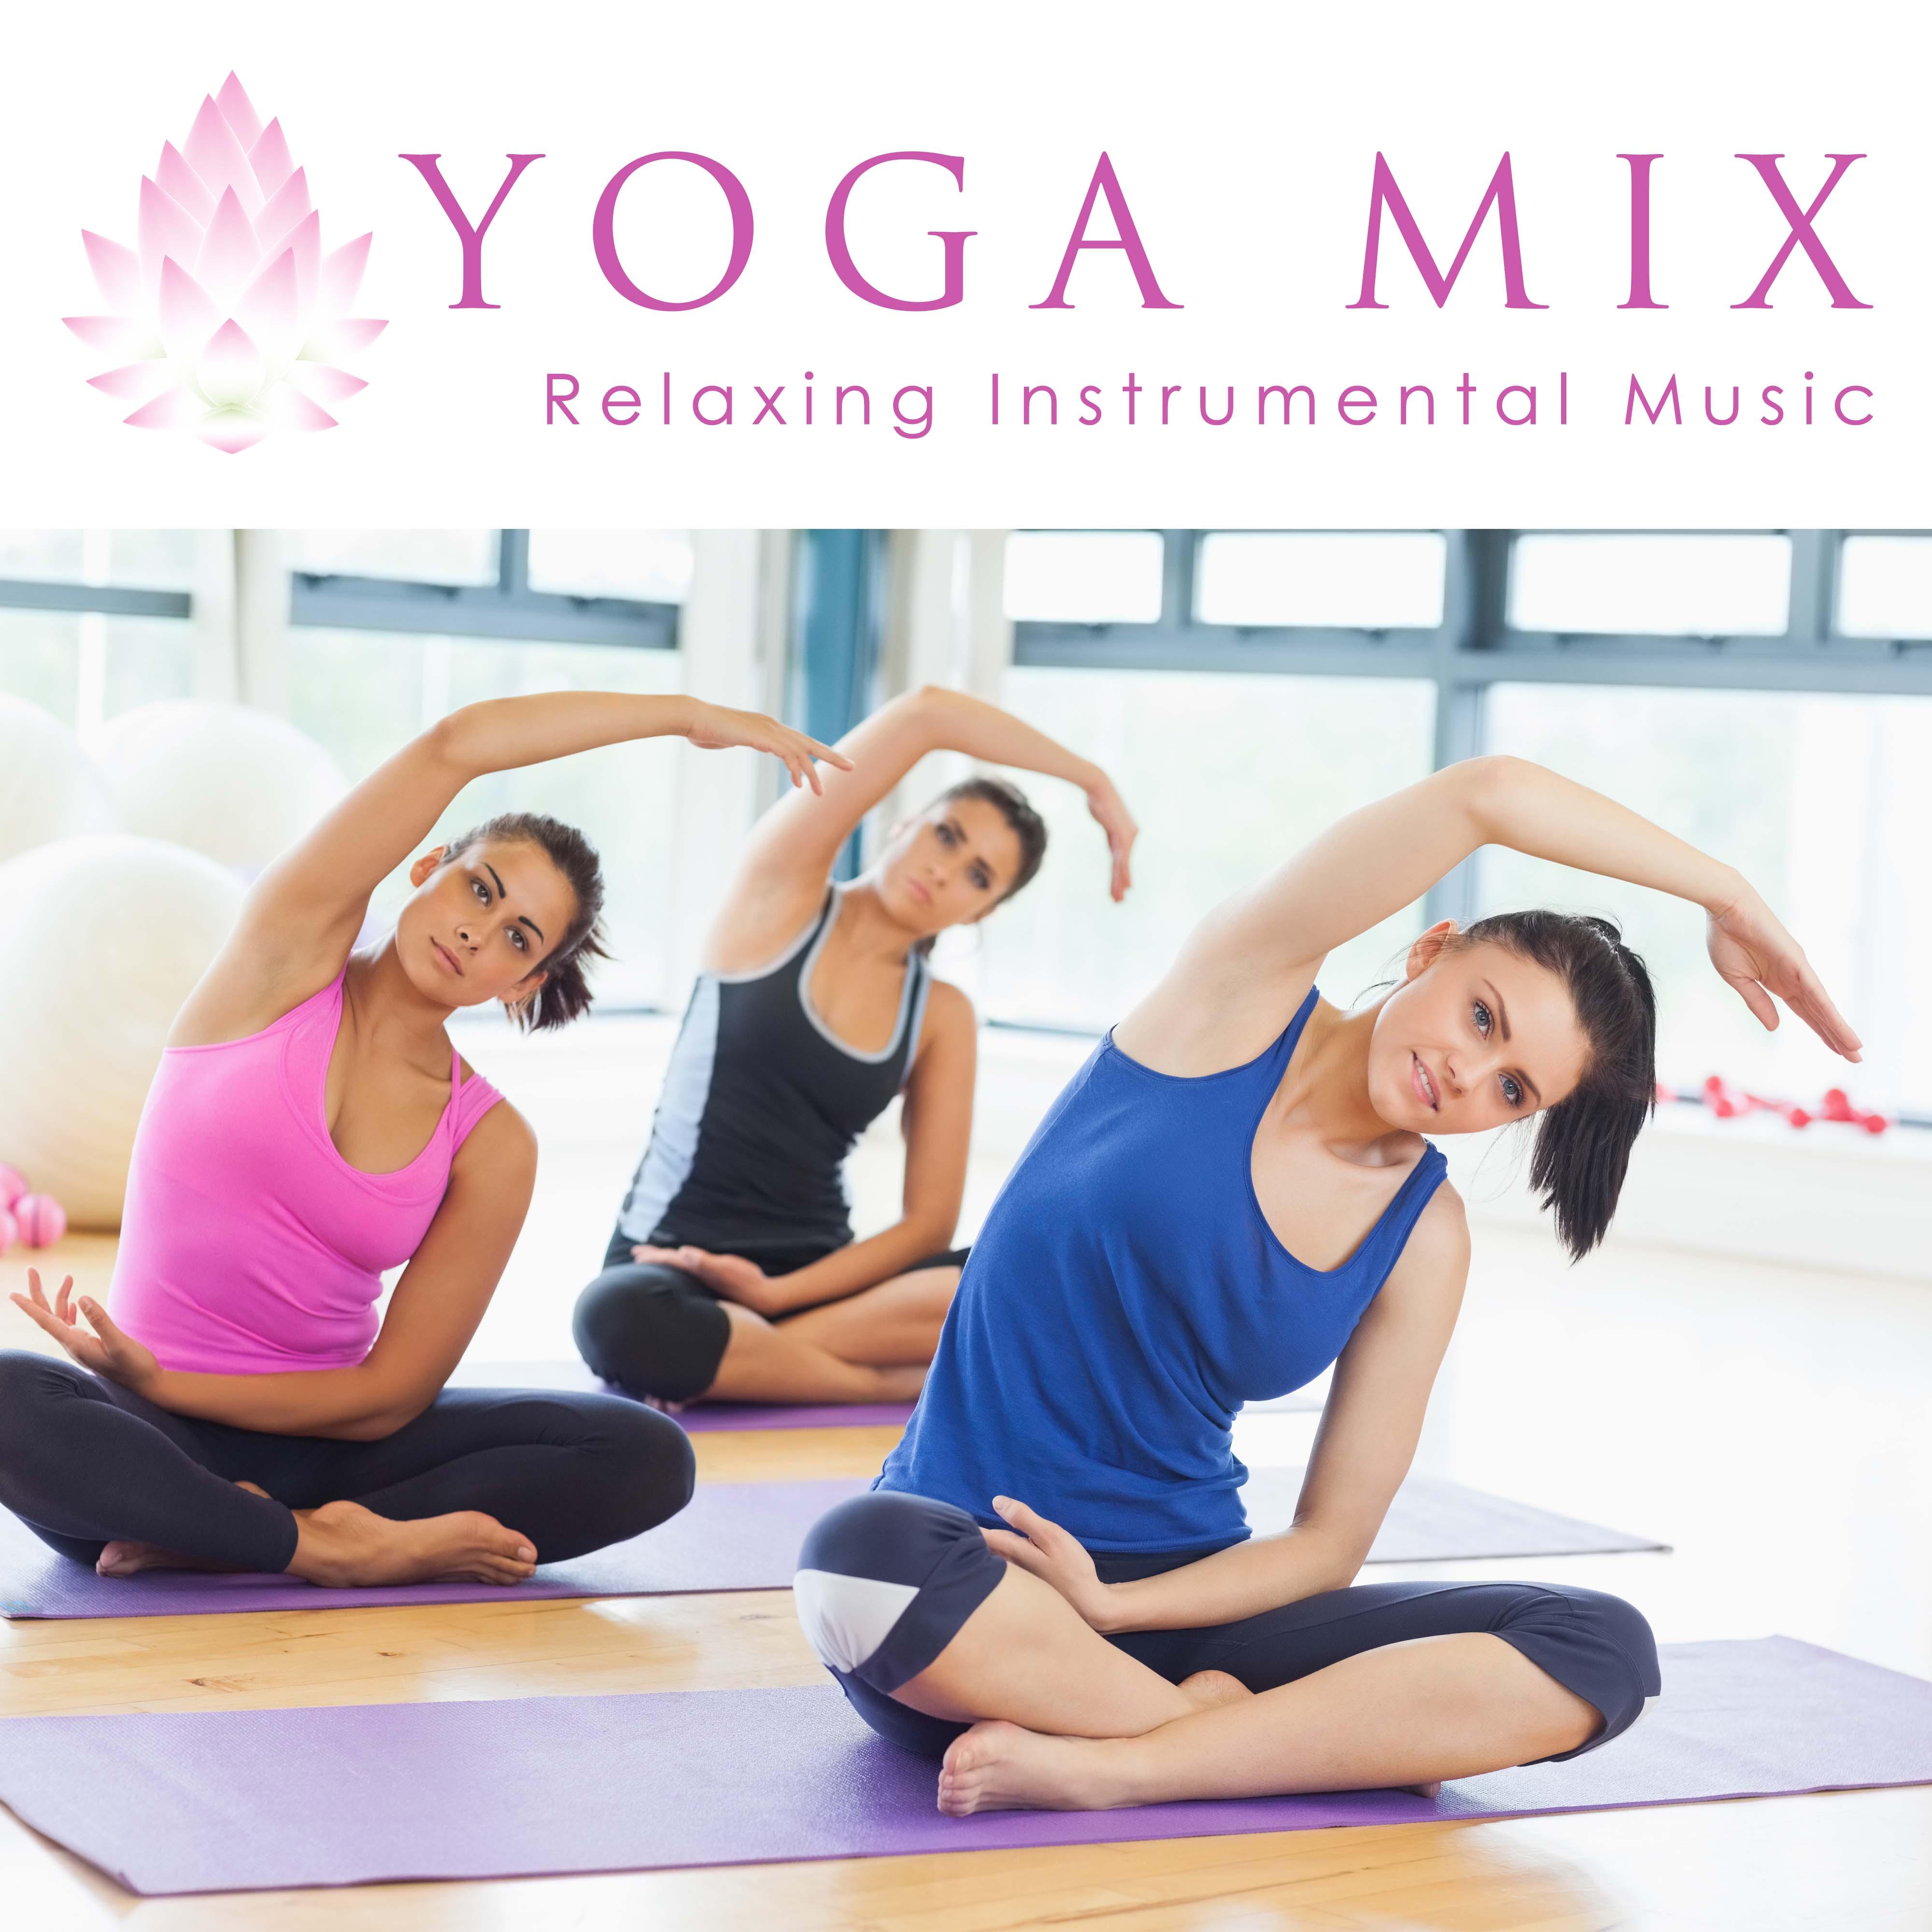 Yoga Mix - Relaxing Instrumental Music for Kundalini Yoga, Hatha Yoga and Ashtanga